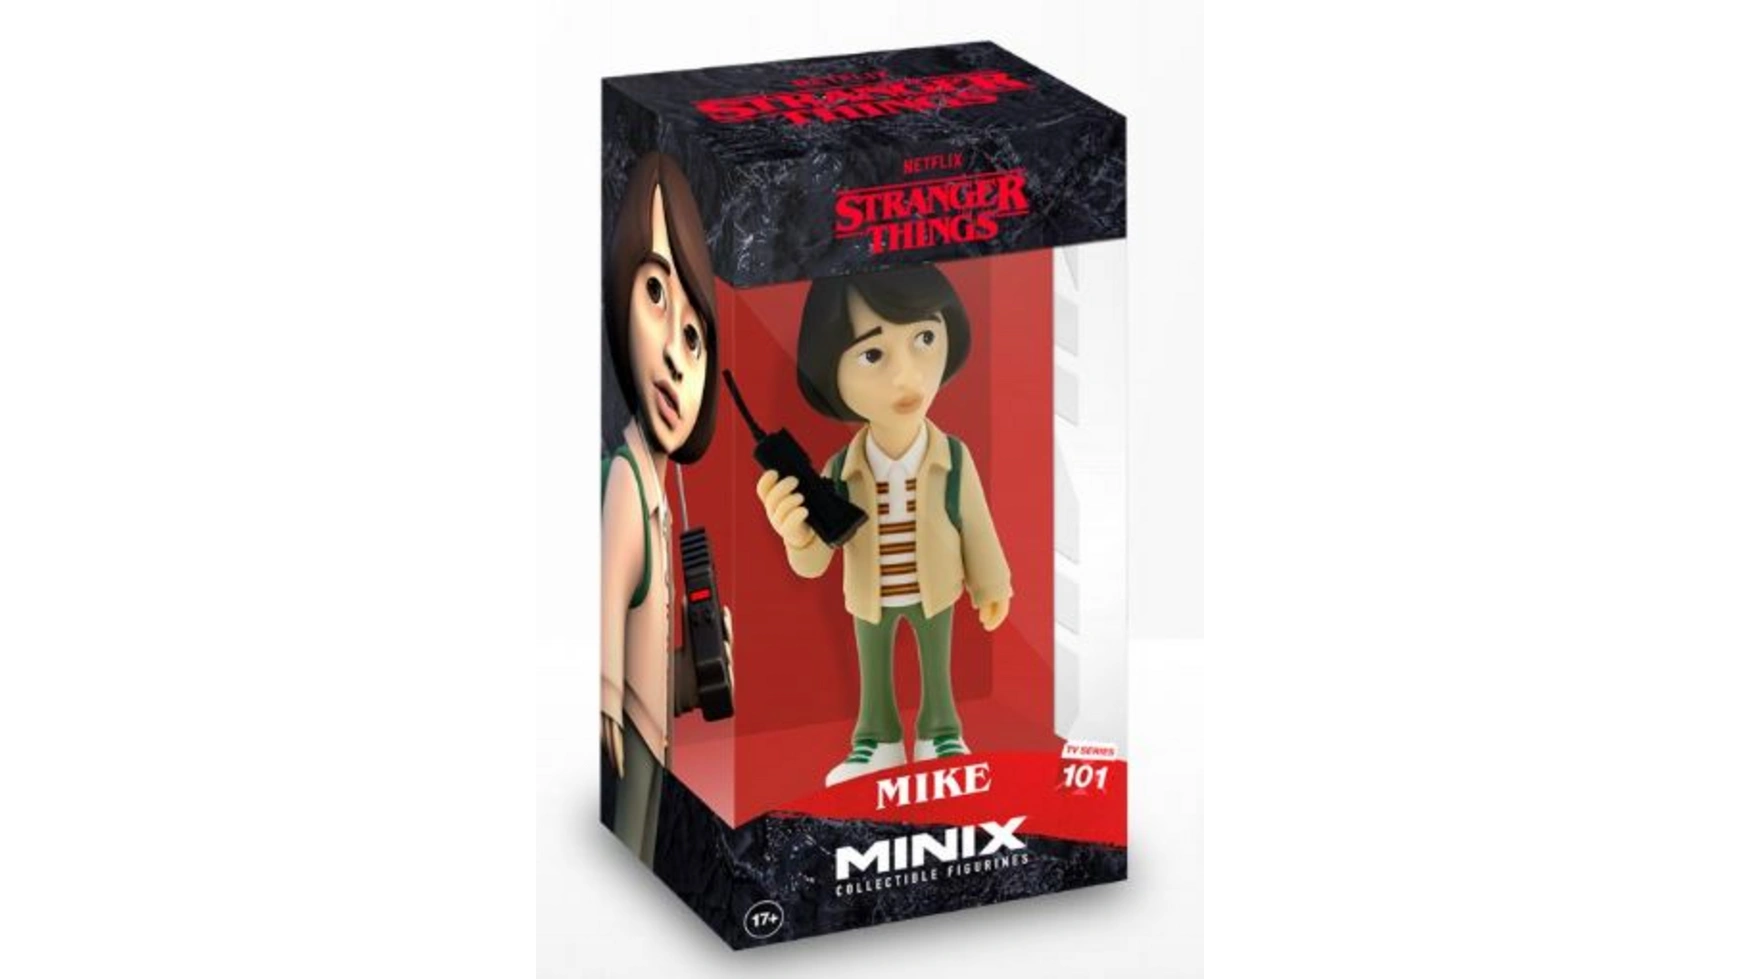 Minix Stranger Things Фигурка Майка 12 см цена и фото